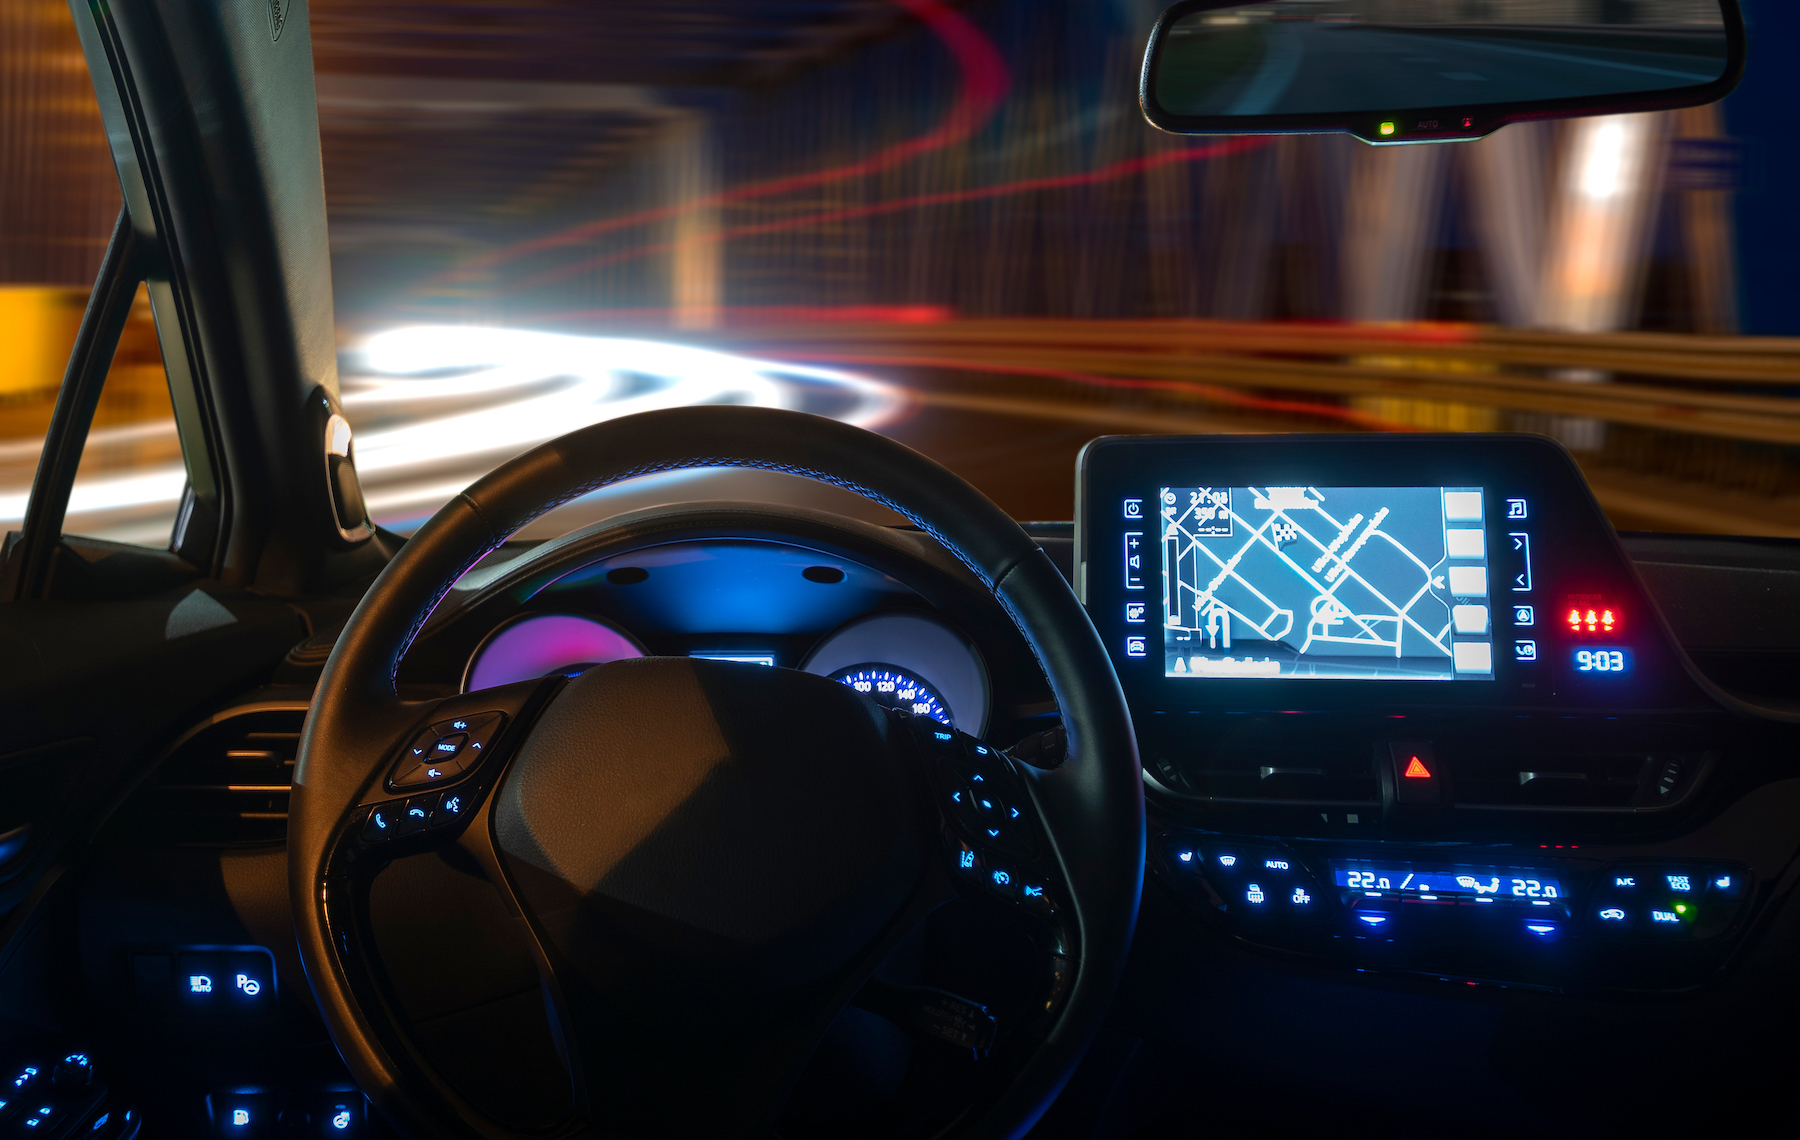 Interior vehicle lighting at night with infotainment, steering wheel